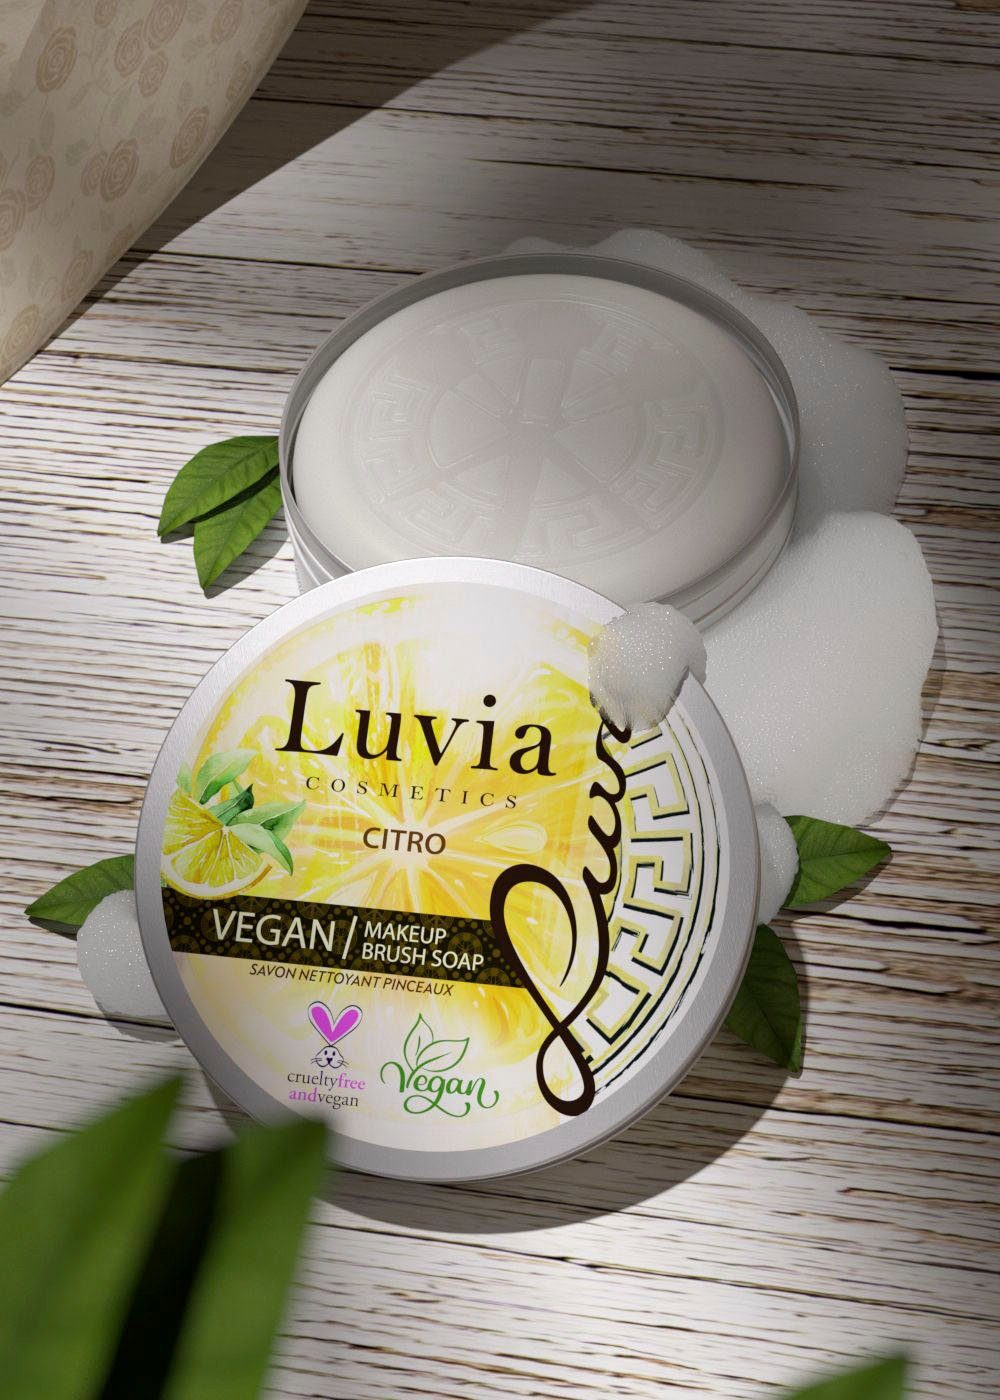 Luvia Cosmetics The Pinselseife (vegan) Brush Essential Soap